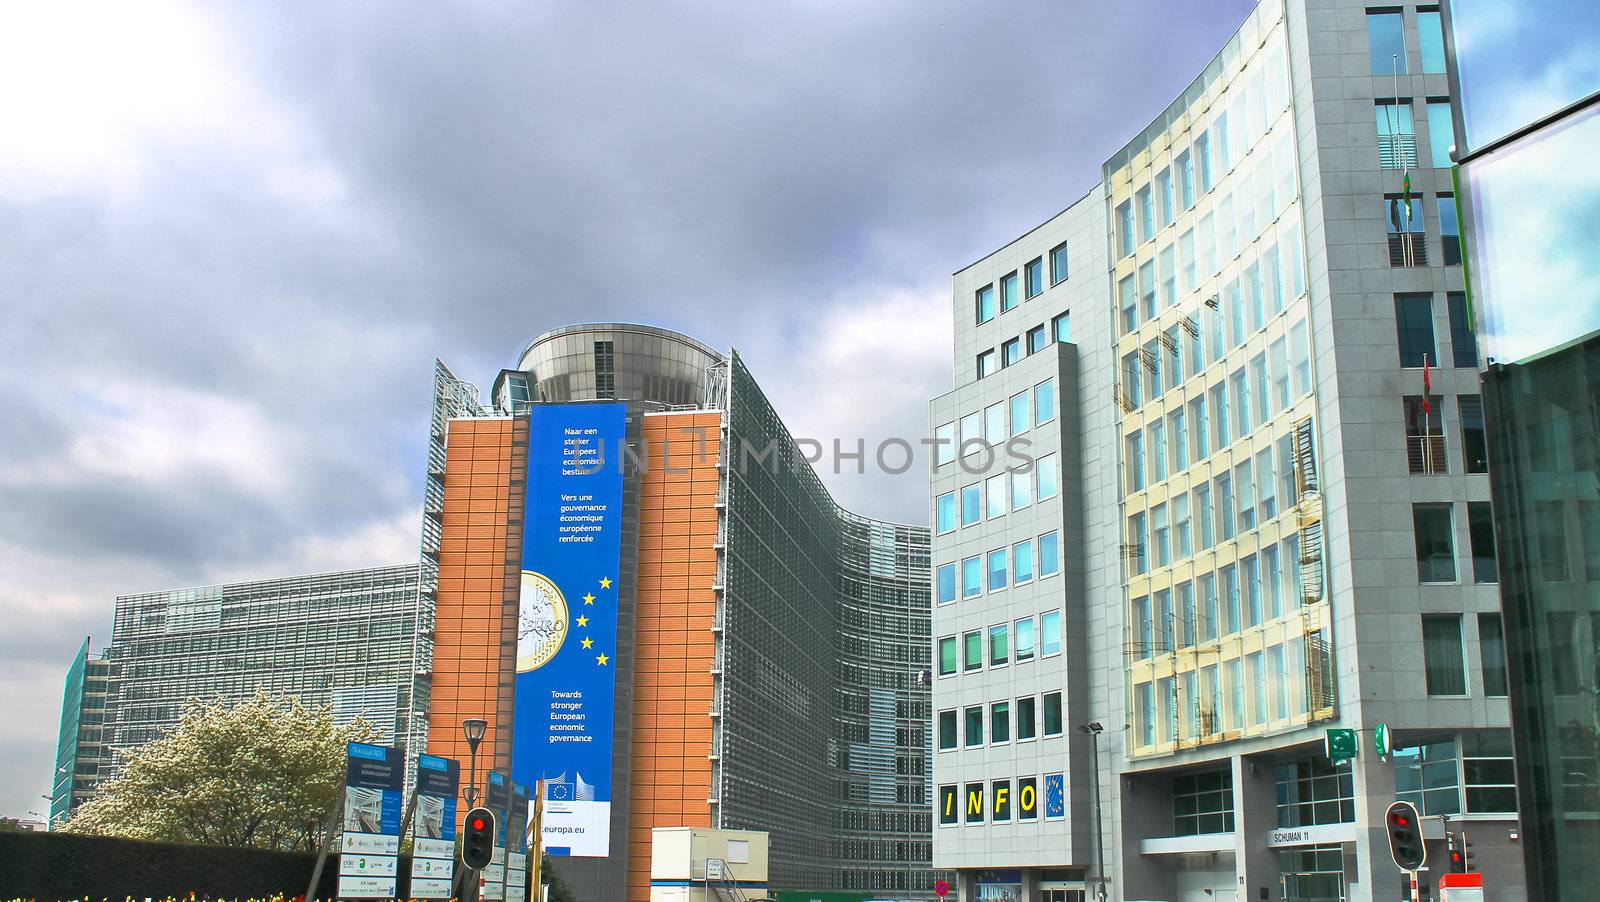  European Parliament in Brussels. Belgium by NickNick